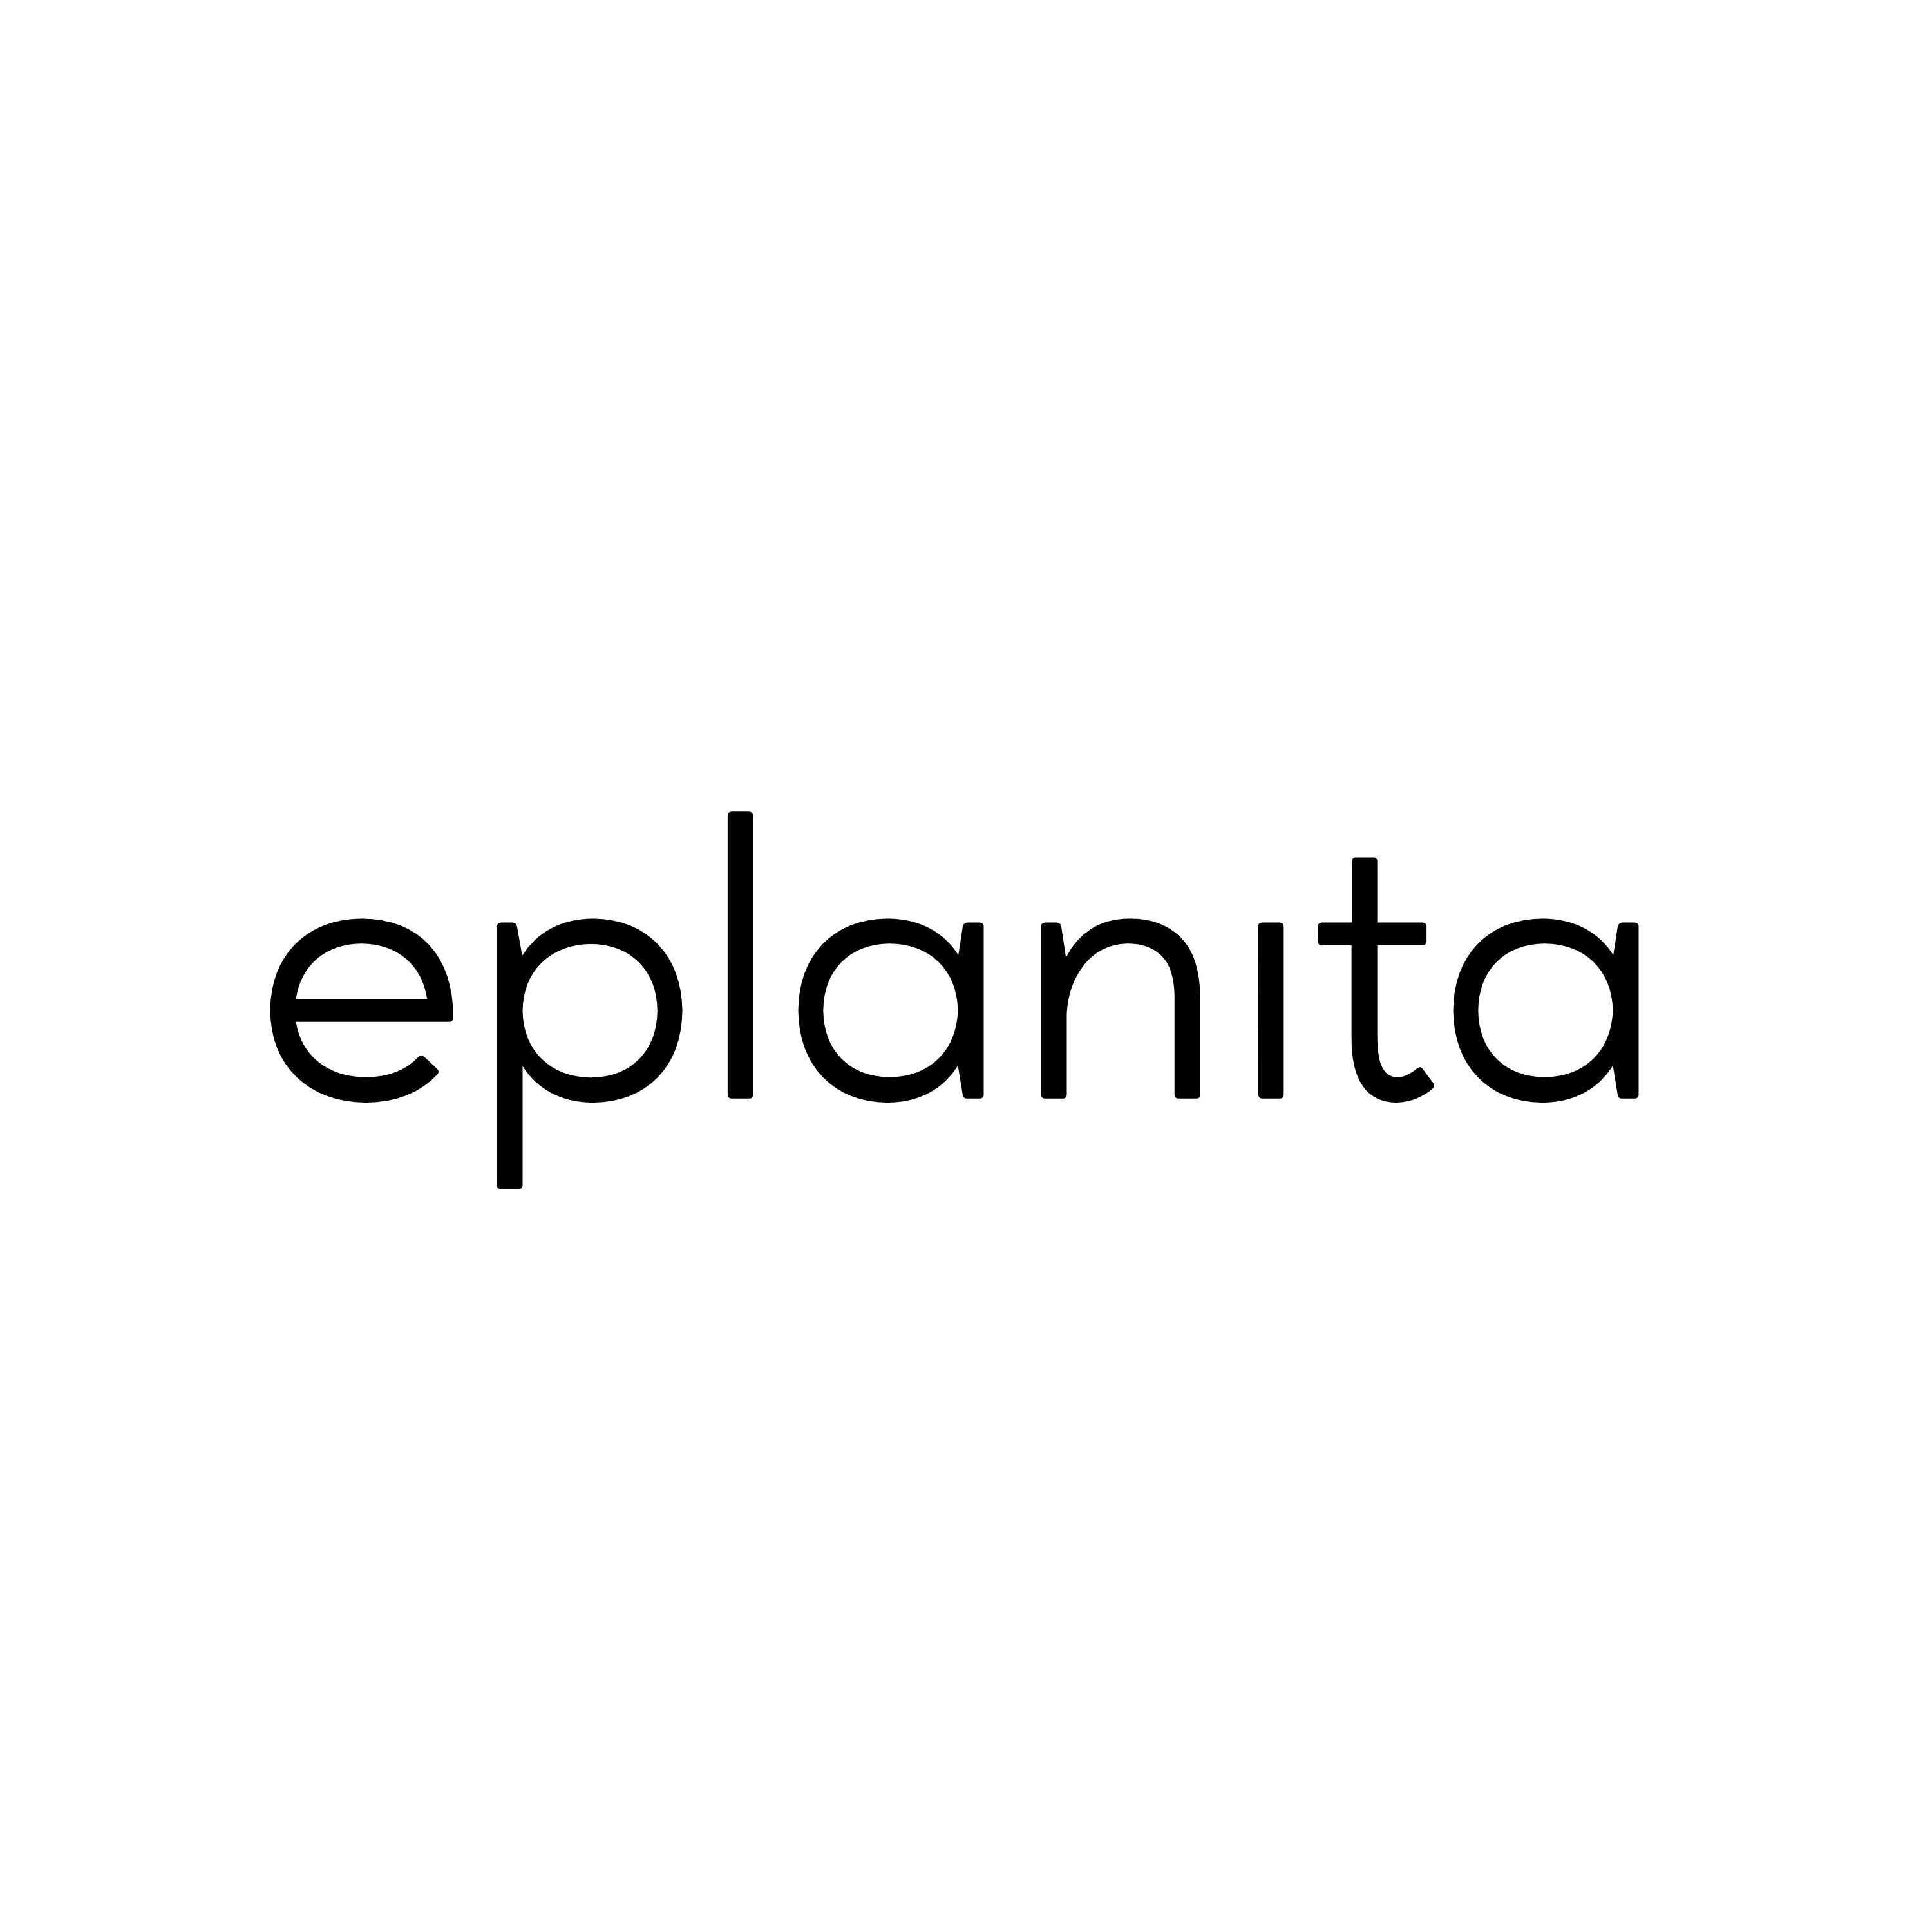  eplanita Natural Dish Brush, 3 Replacement Heads